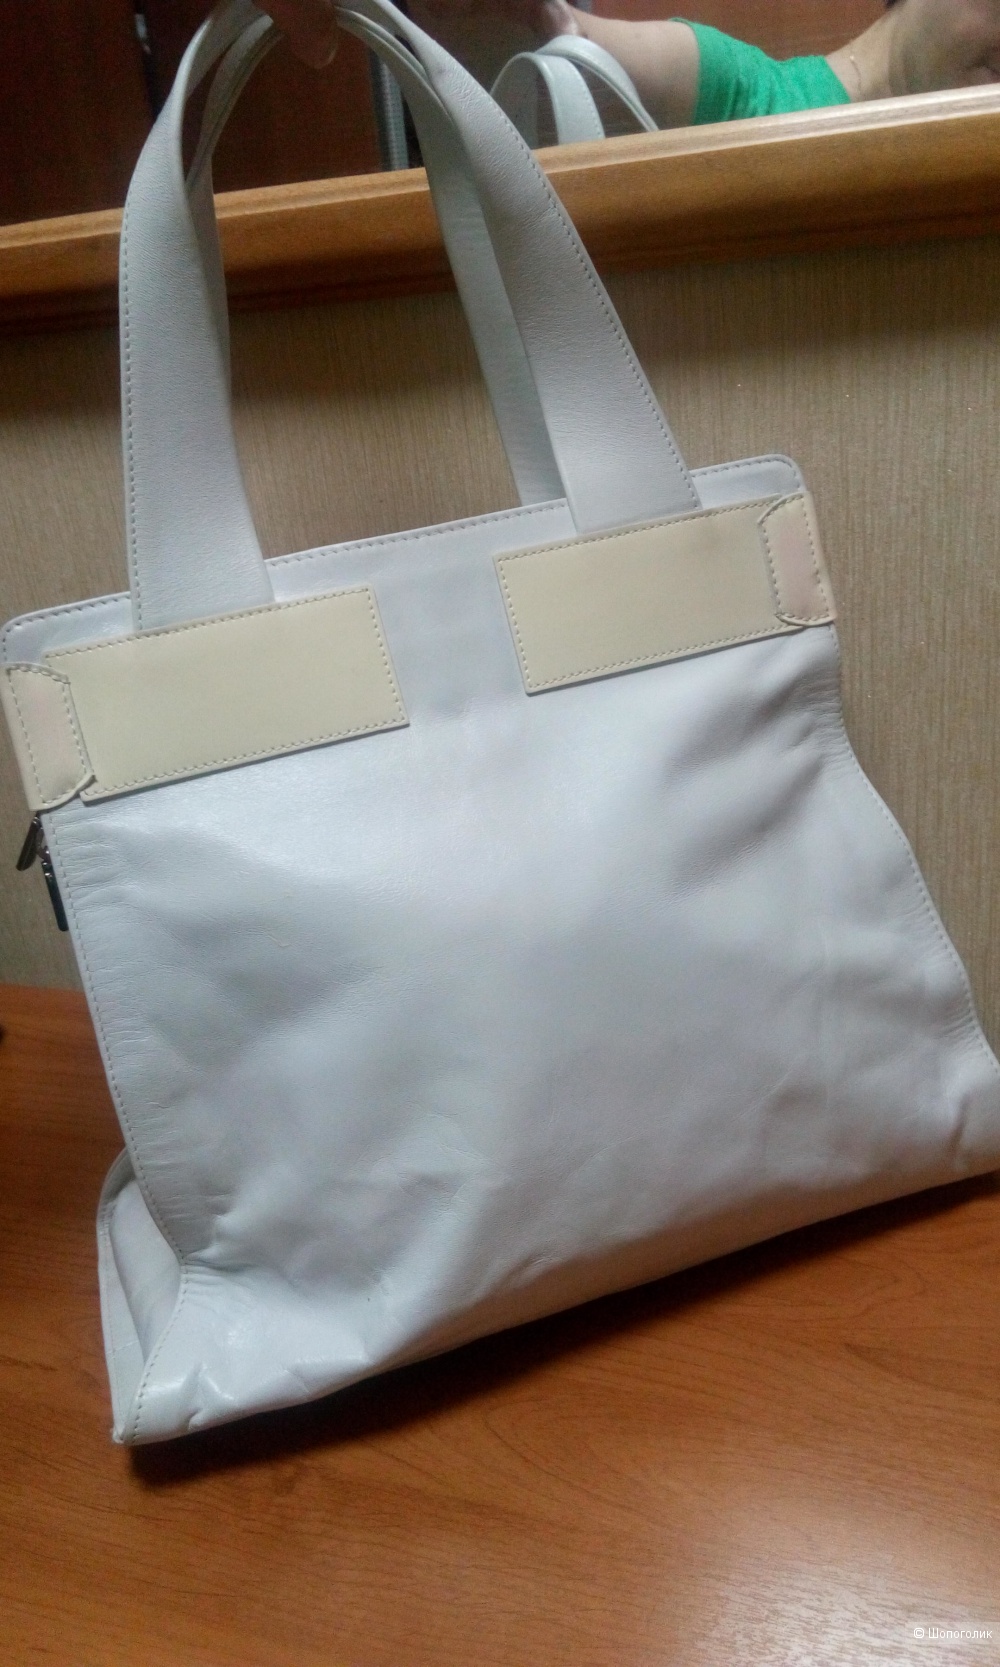 Кожаная женская сумка RIPANI  , размеры Ш 35 см х В 31 см х Г 14 см